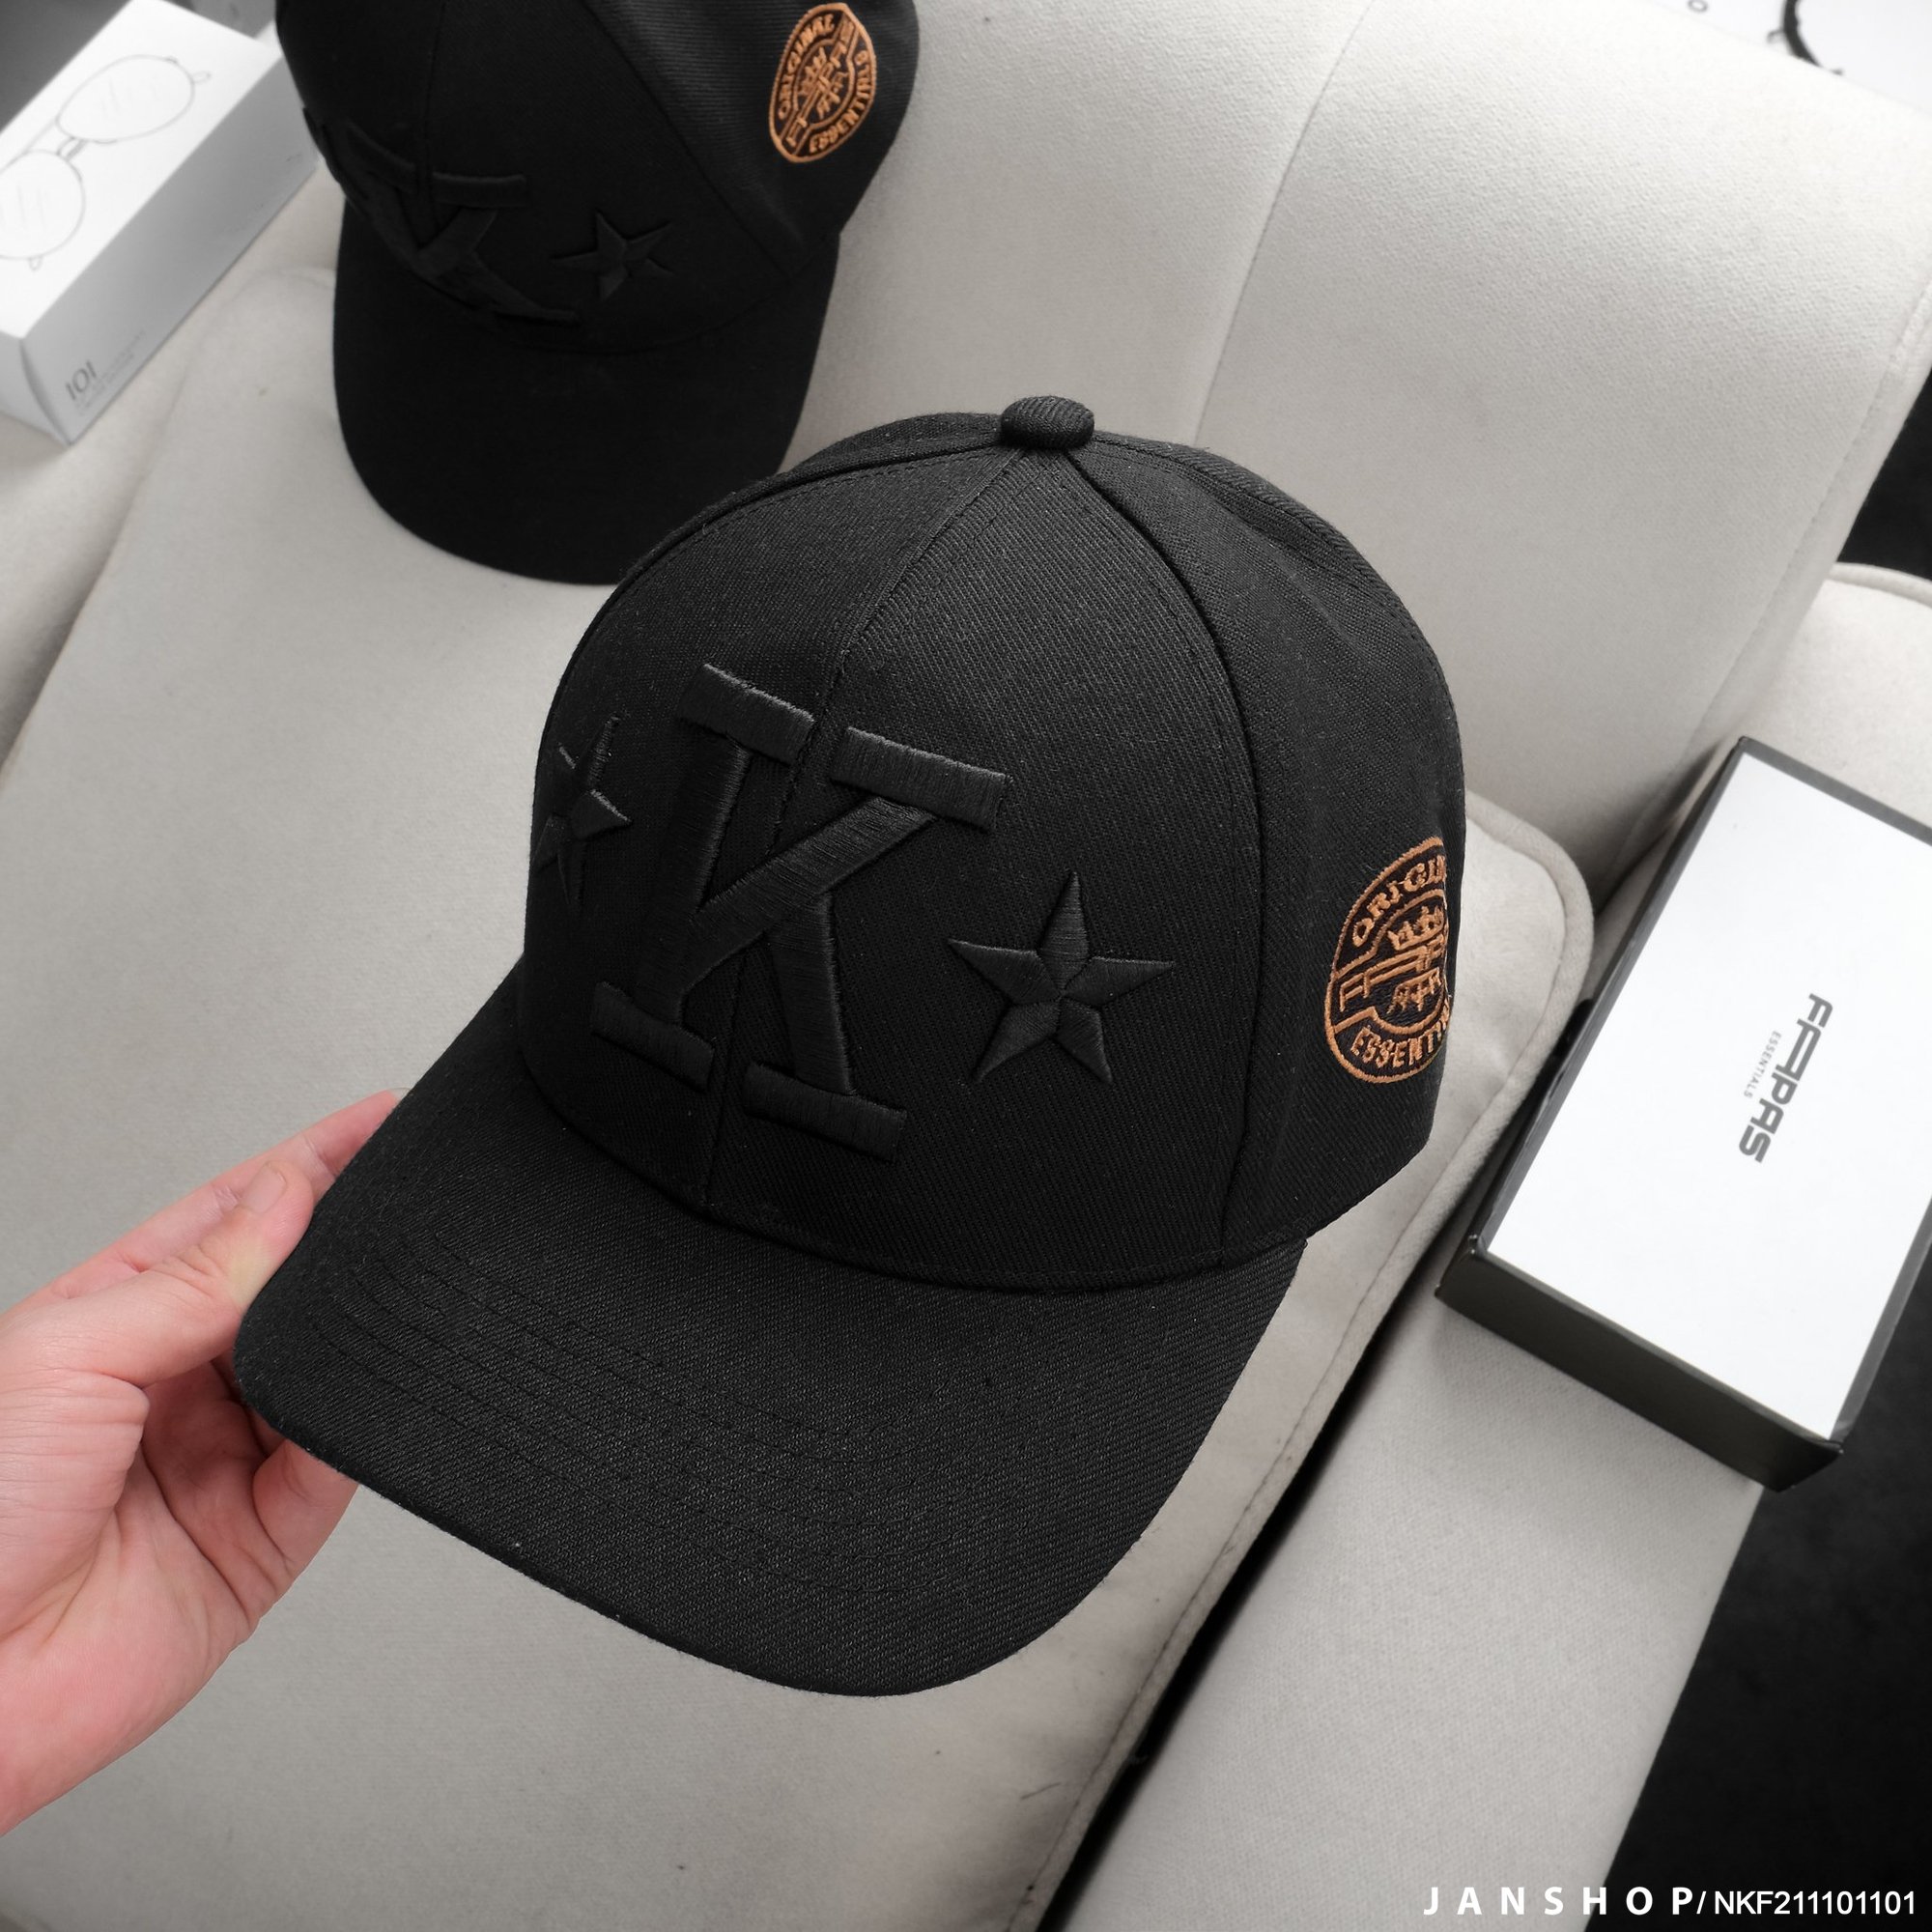 FAPAS BLACK K CAP